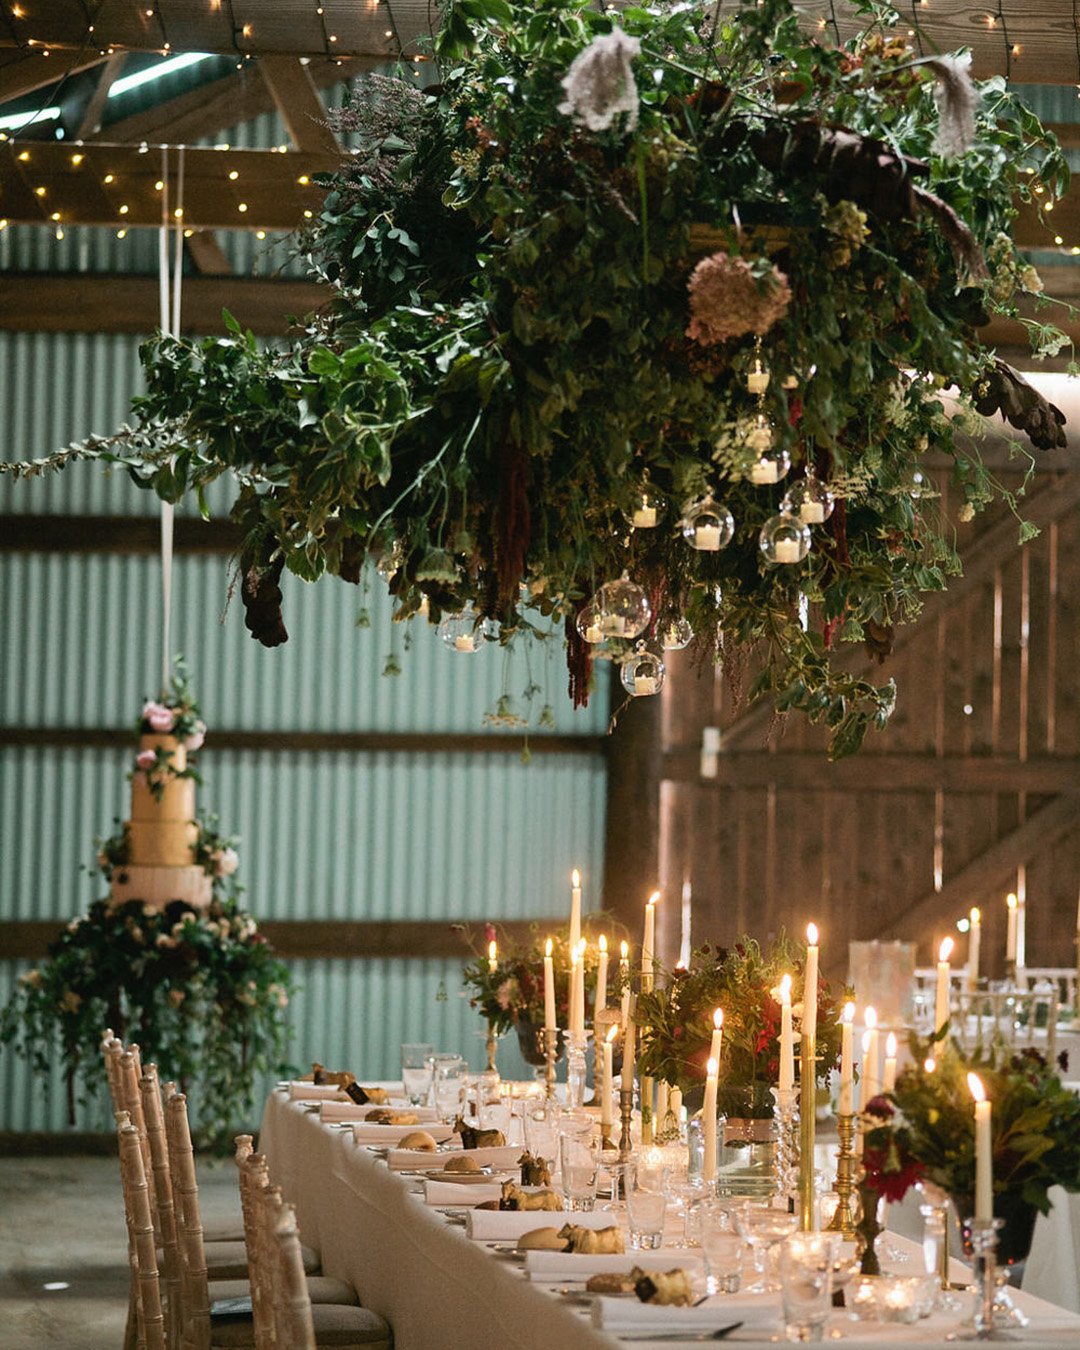 greenery wedding decor barn reception with hanging cake stand jenismithphotography